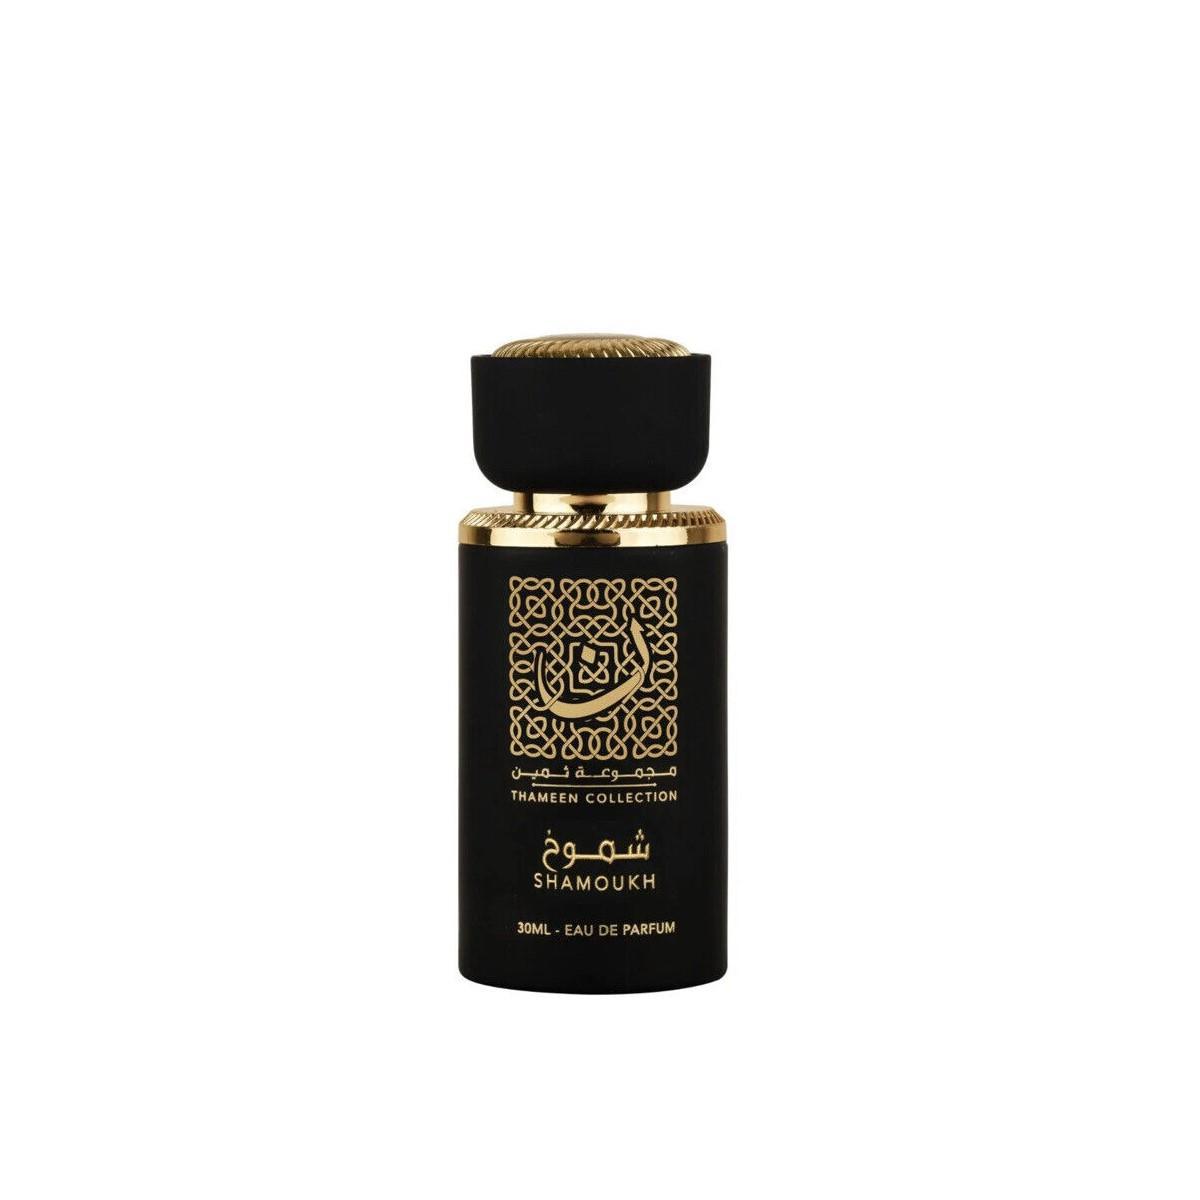 Shamoukh (Thameen Collection) Perfume Eau De Parfum 30Ml By Lattafa